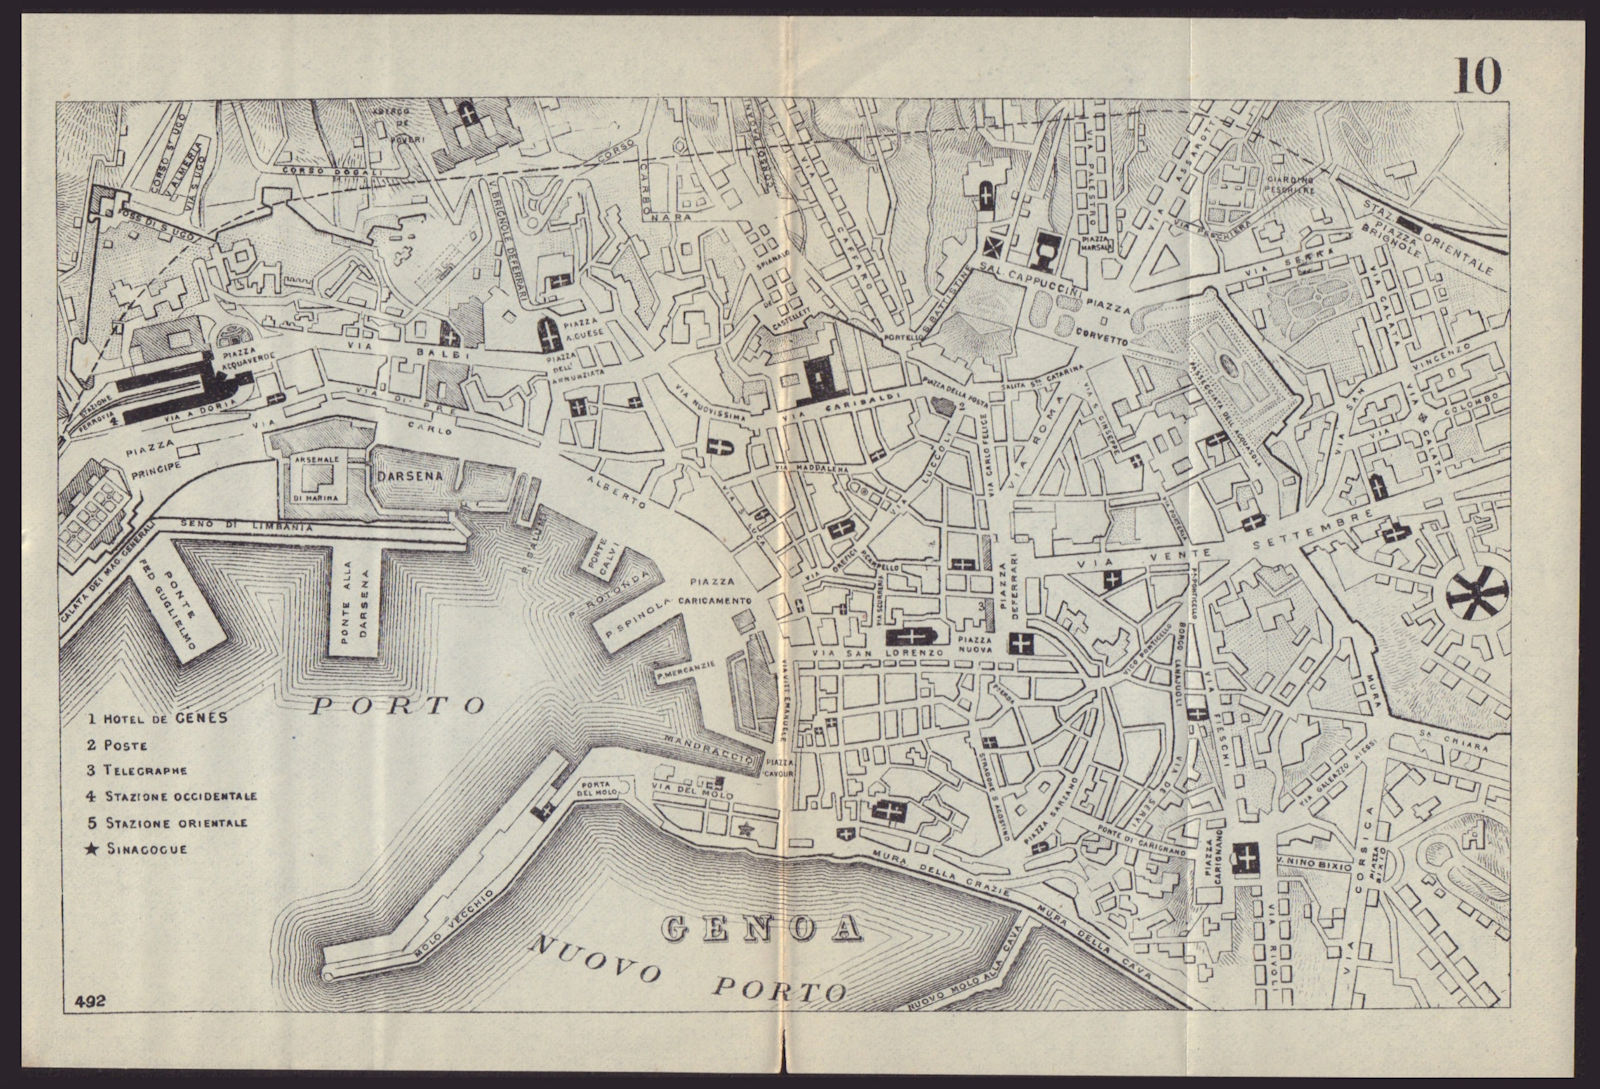 GENOA GENOVA GÊNES antique town plan city map. Italy. BRADSHAW 1892 old